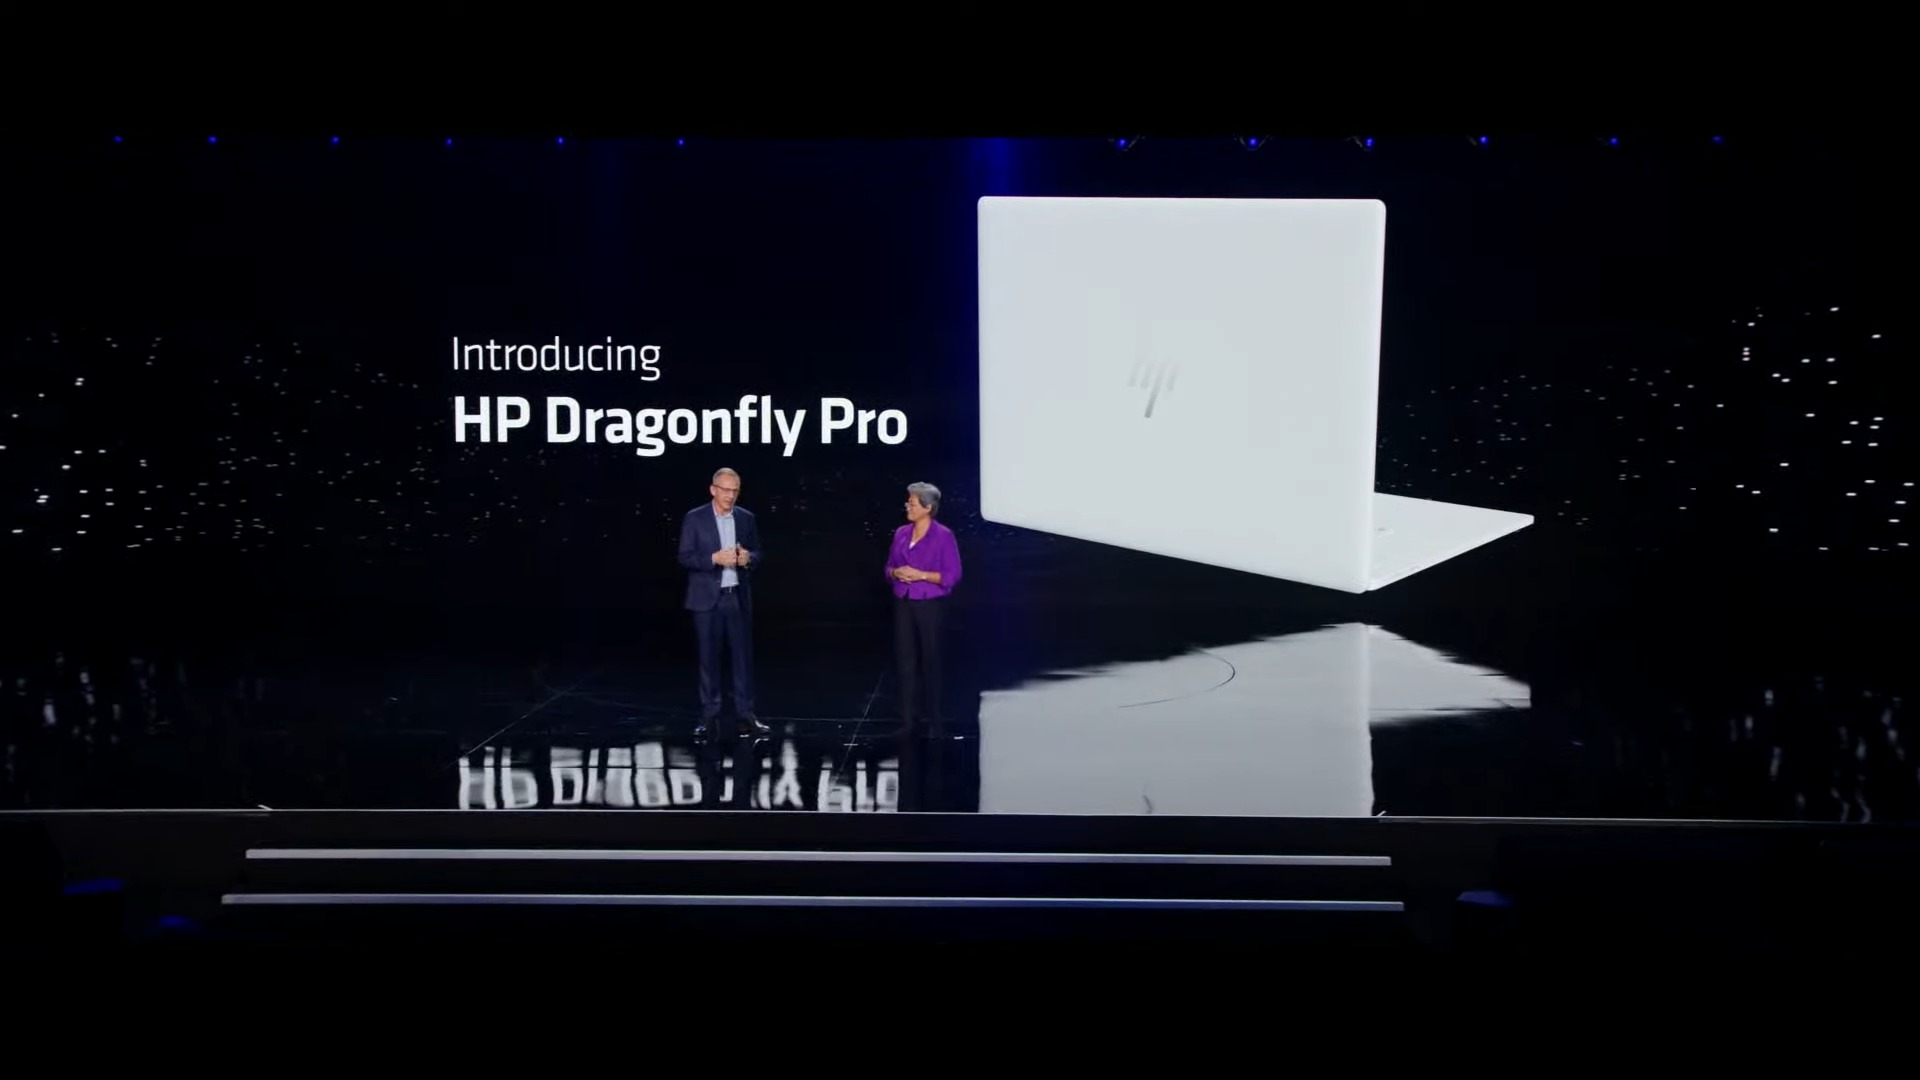 HP Dragonfly Pro